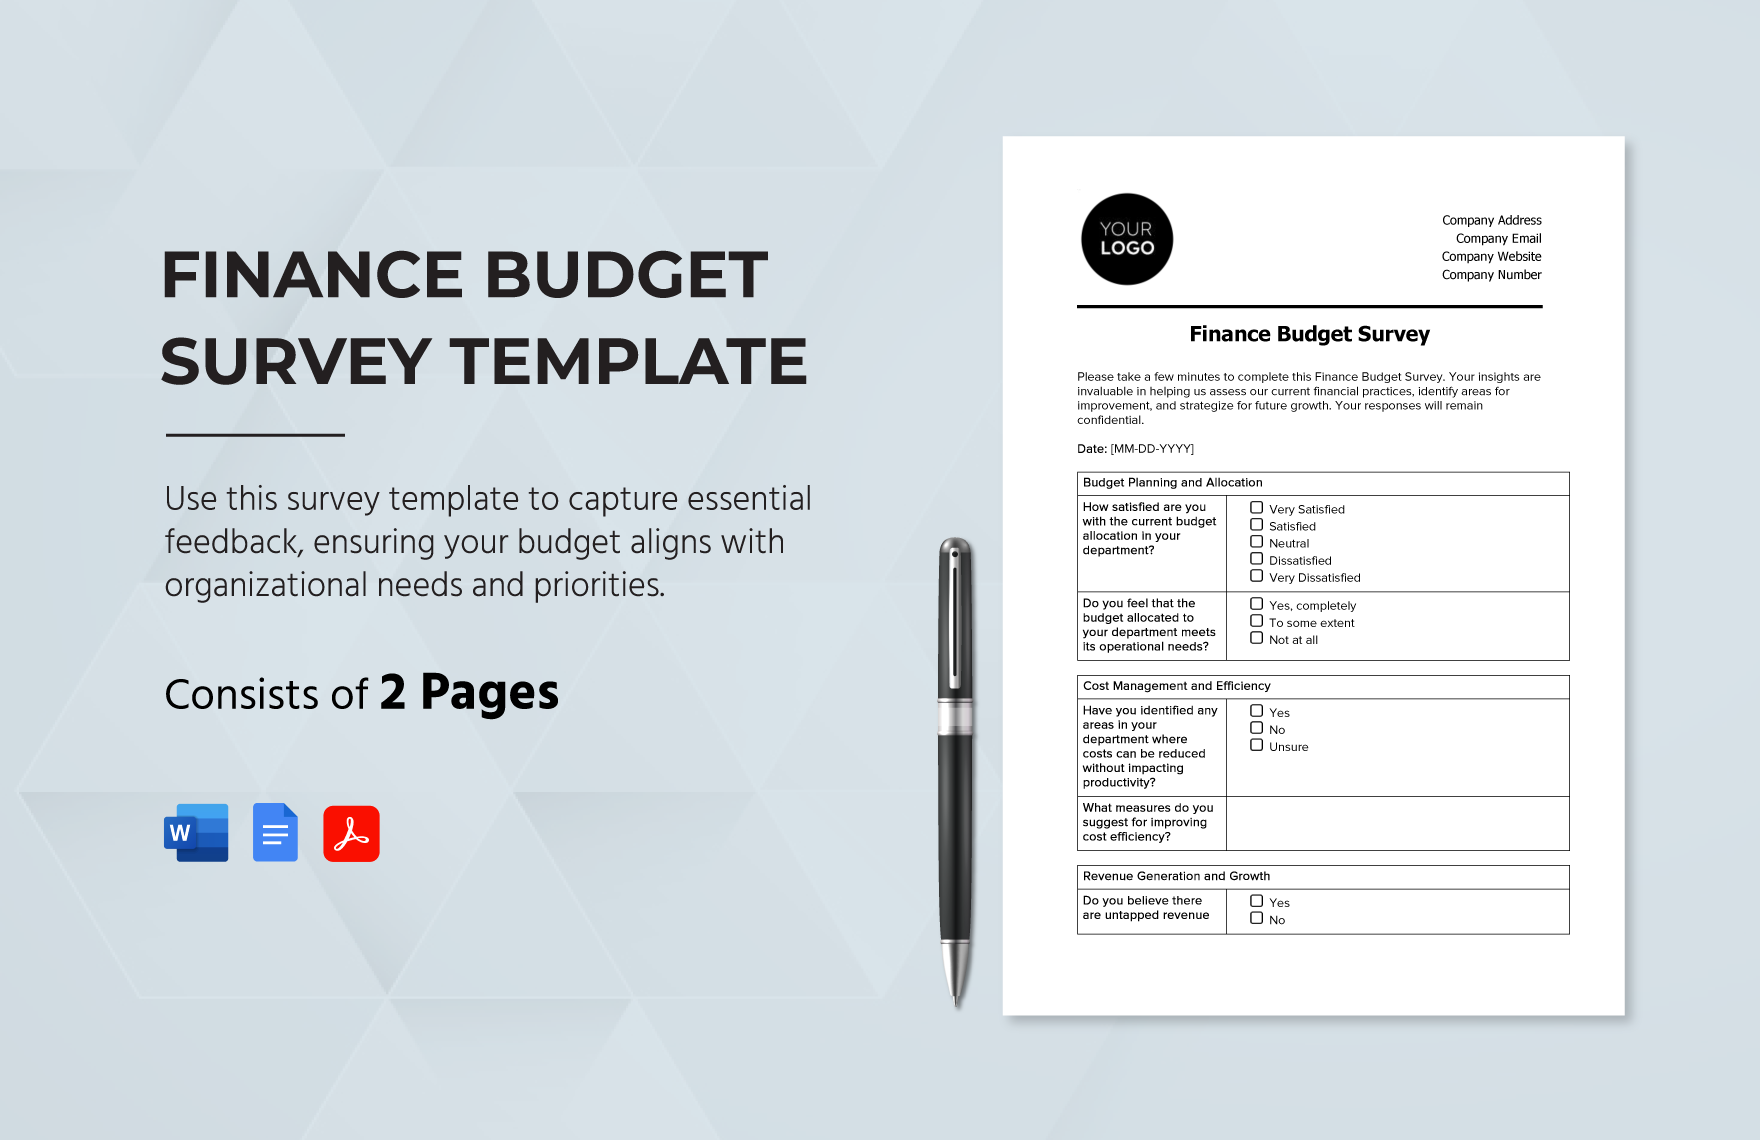 Finance Budget Survey Template